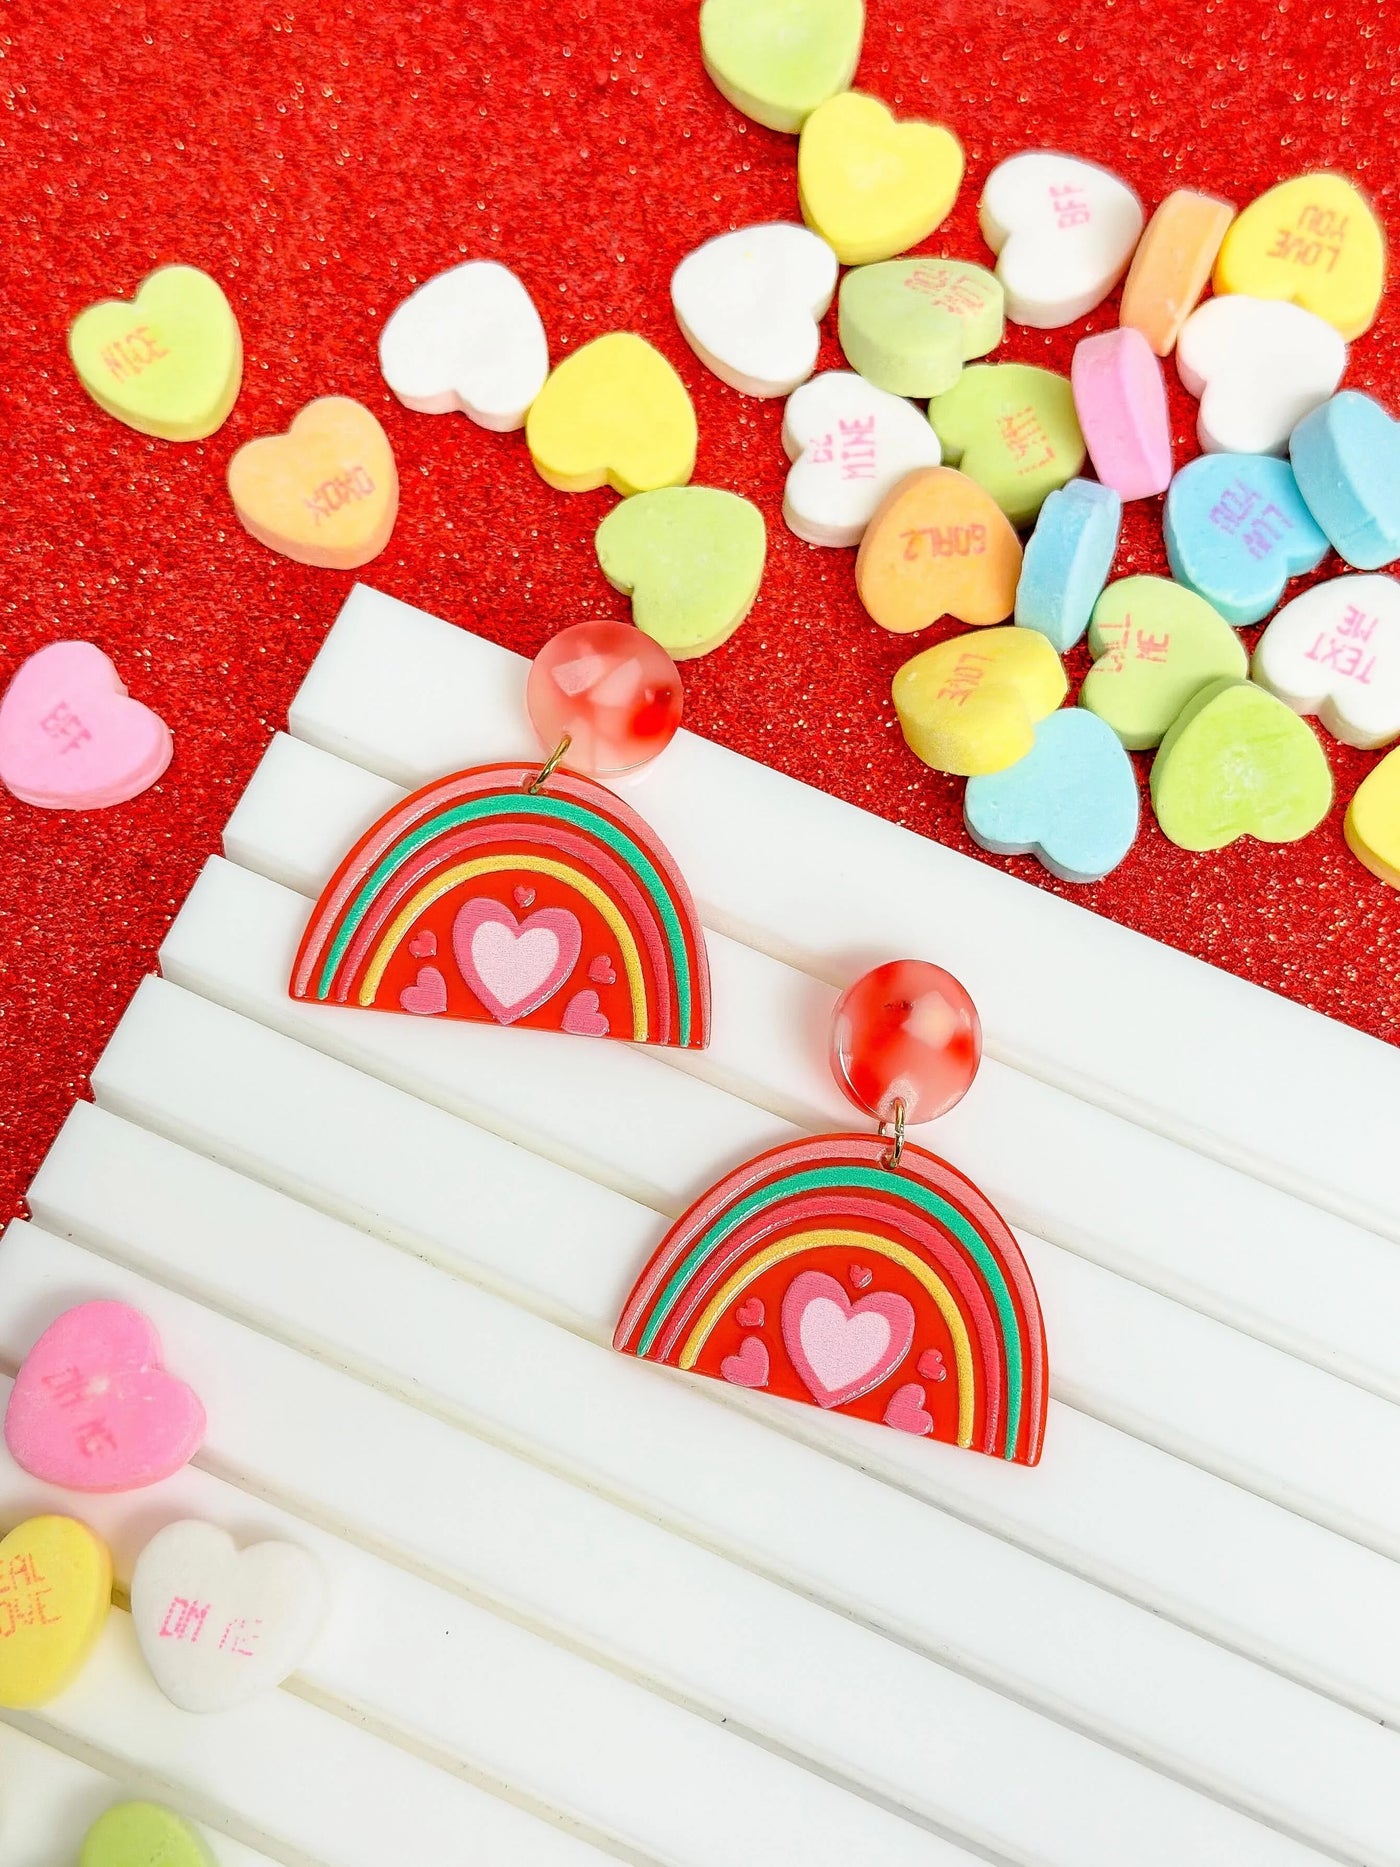 PREORDER: Acrylic Rainbow Heart Dangle Earrings